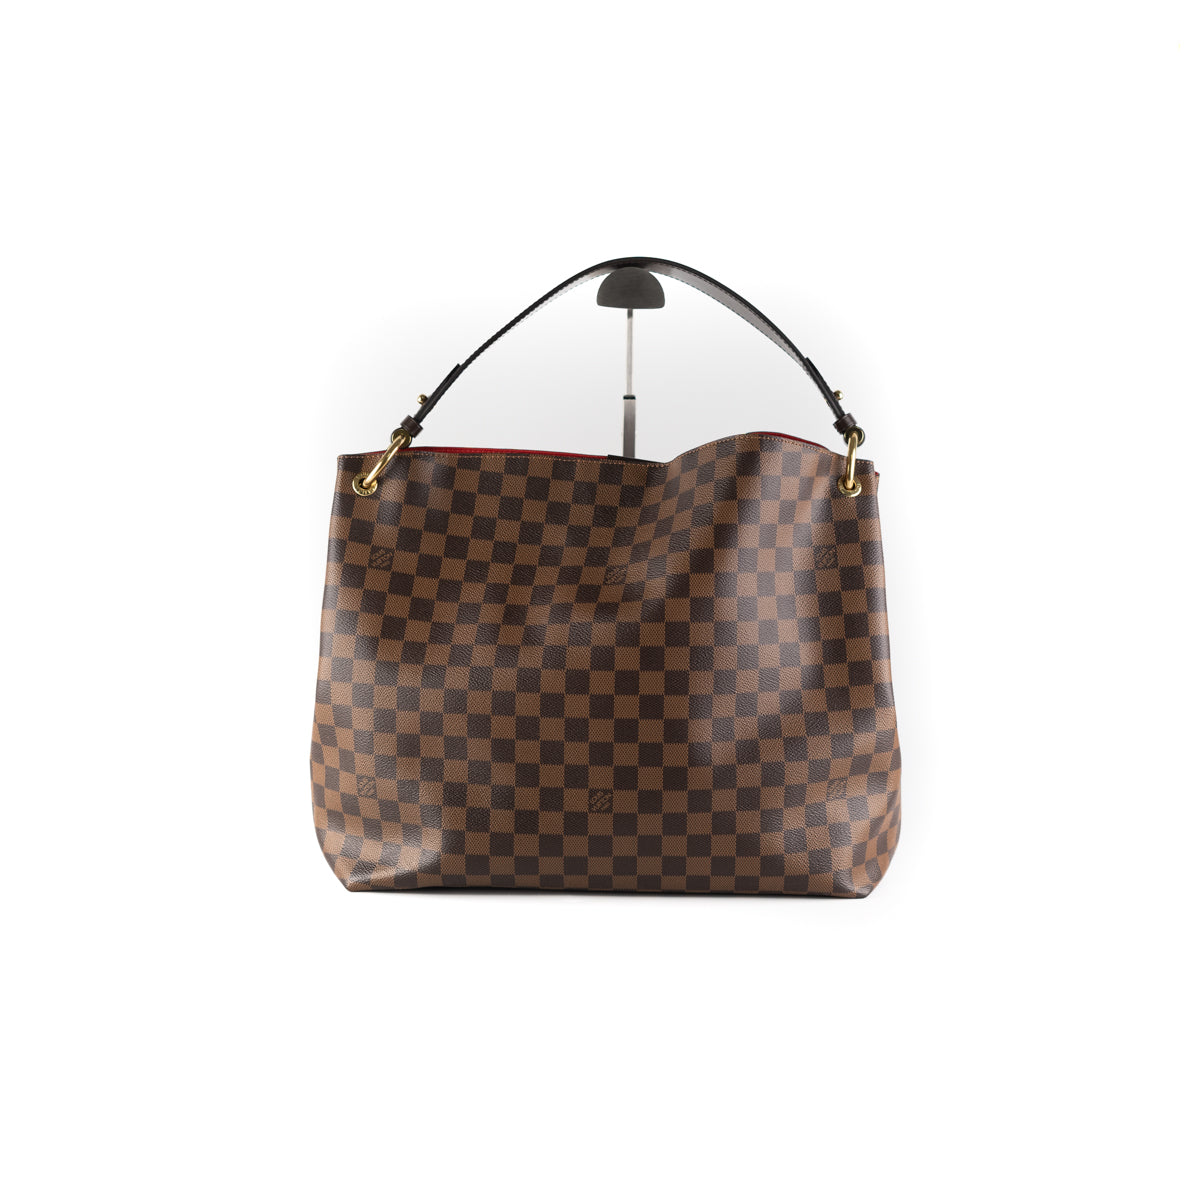 Louis Vuitton Graceful MM Bag Damier Ebene - THE PURSE AFFAIR